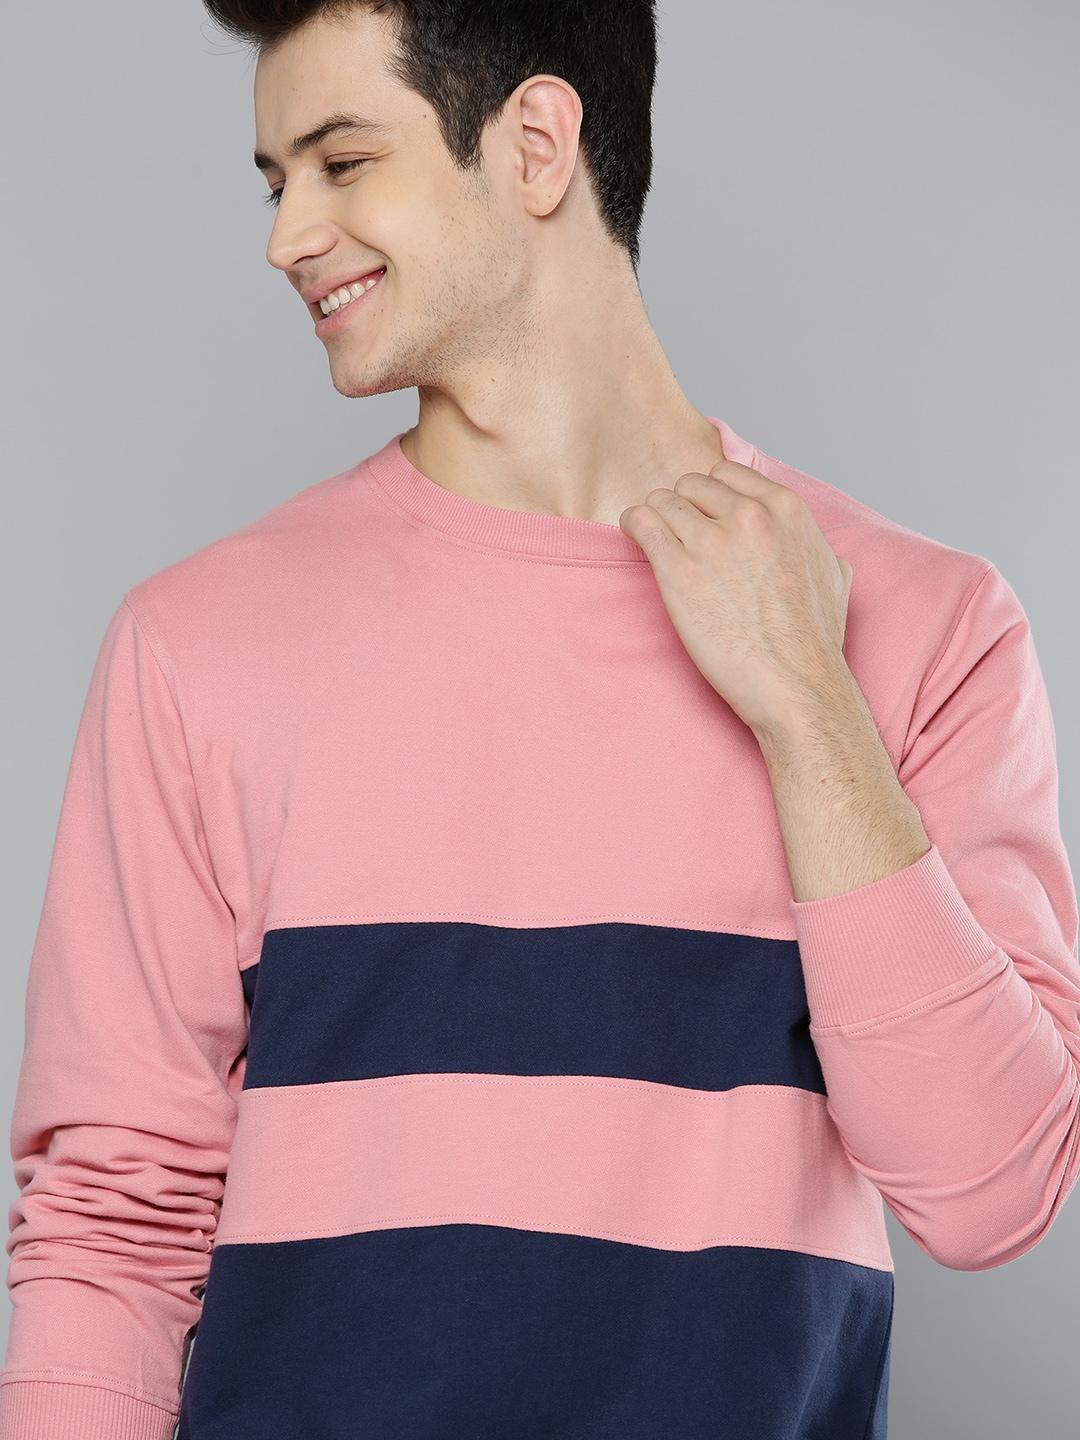 mast-&-harbour-men-pink-&-navy-blue-striped-sweatshirt